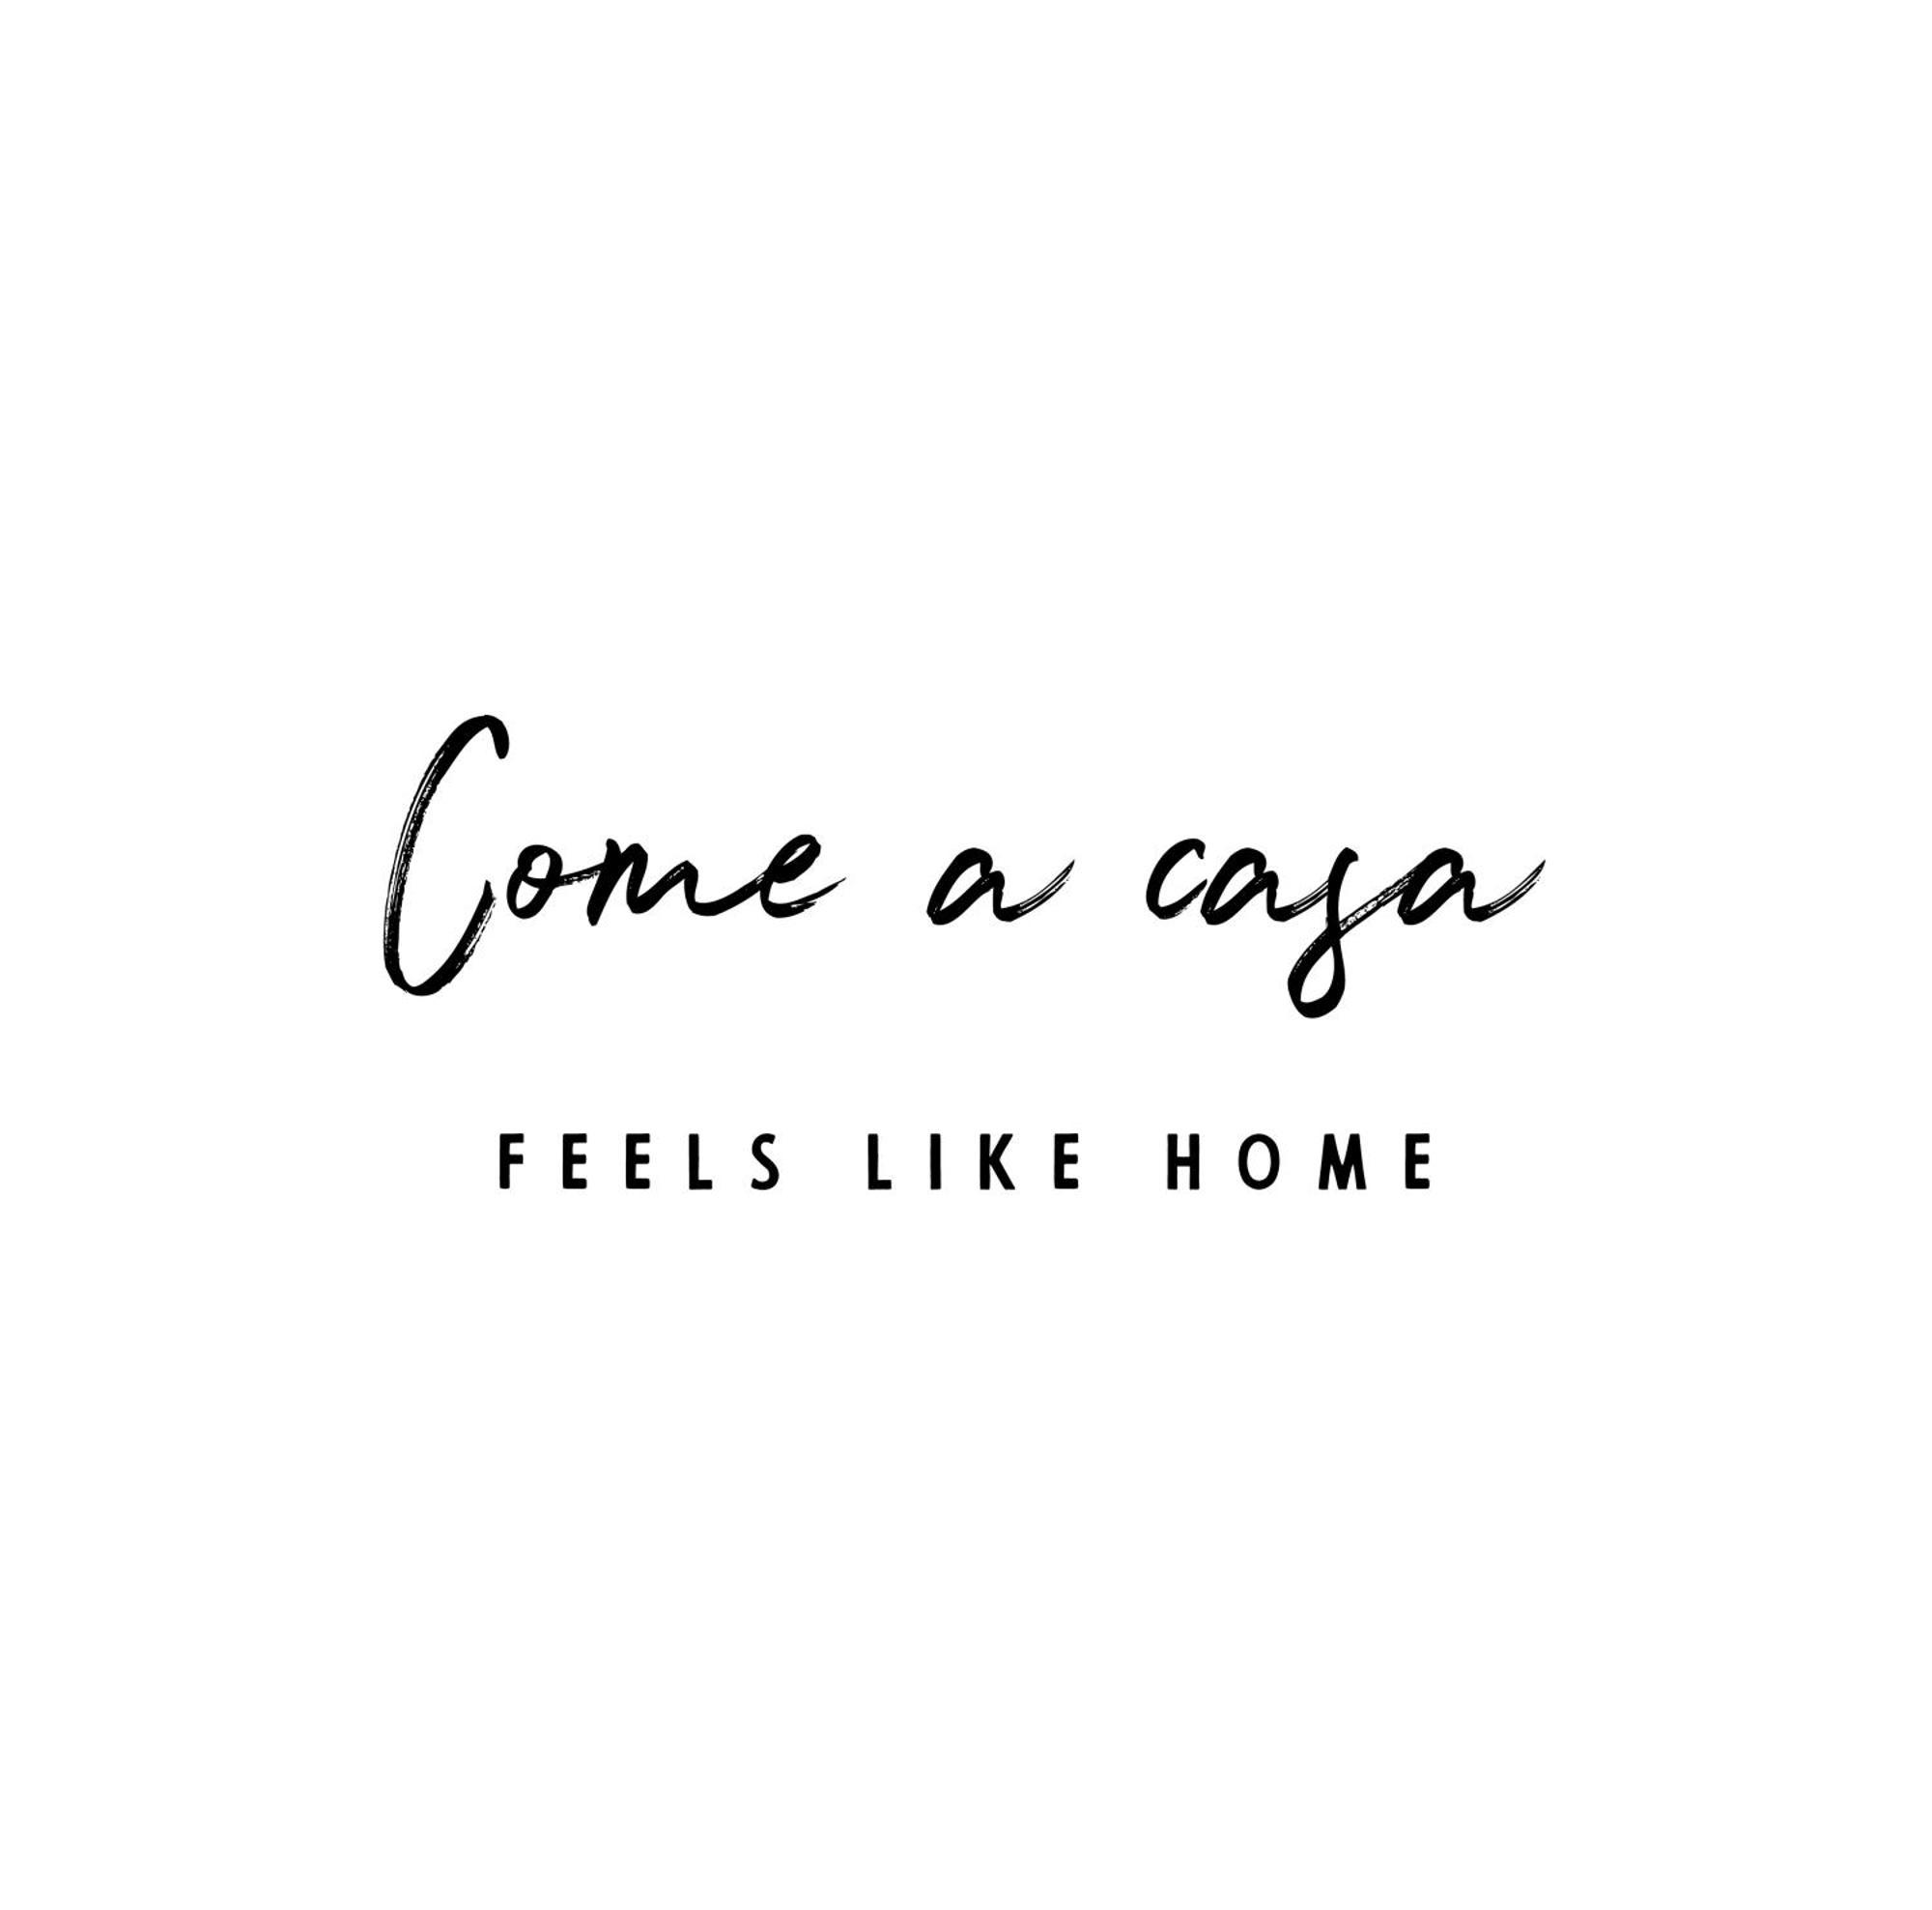 Come A Casa - Feels Like Home 滨海波利尼亚诺 外观 照片